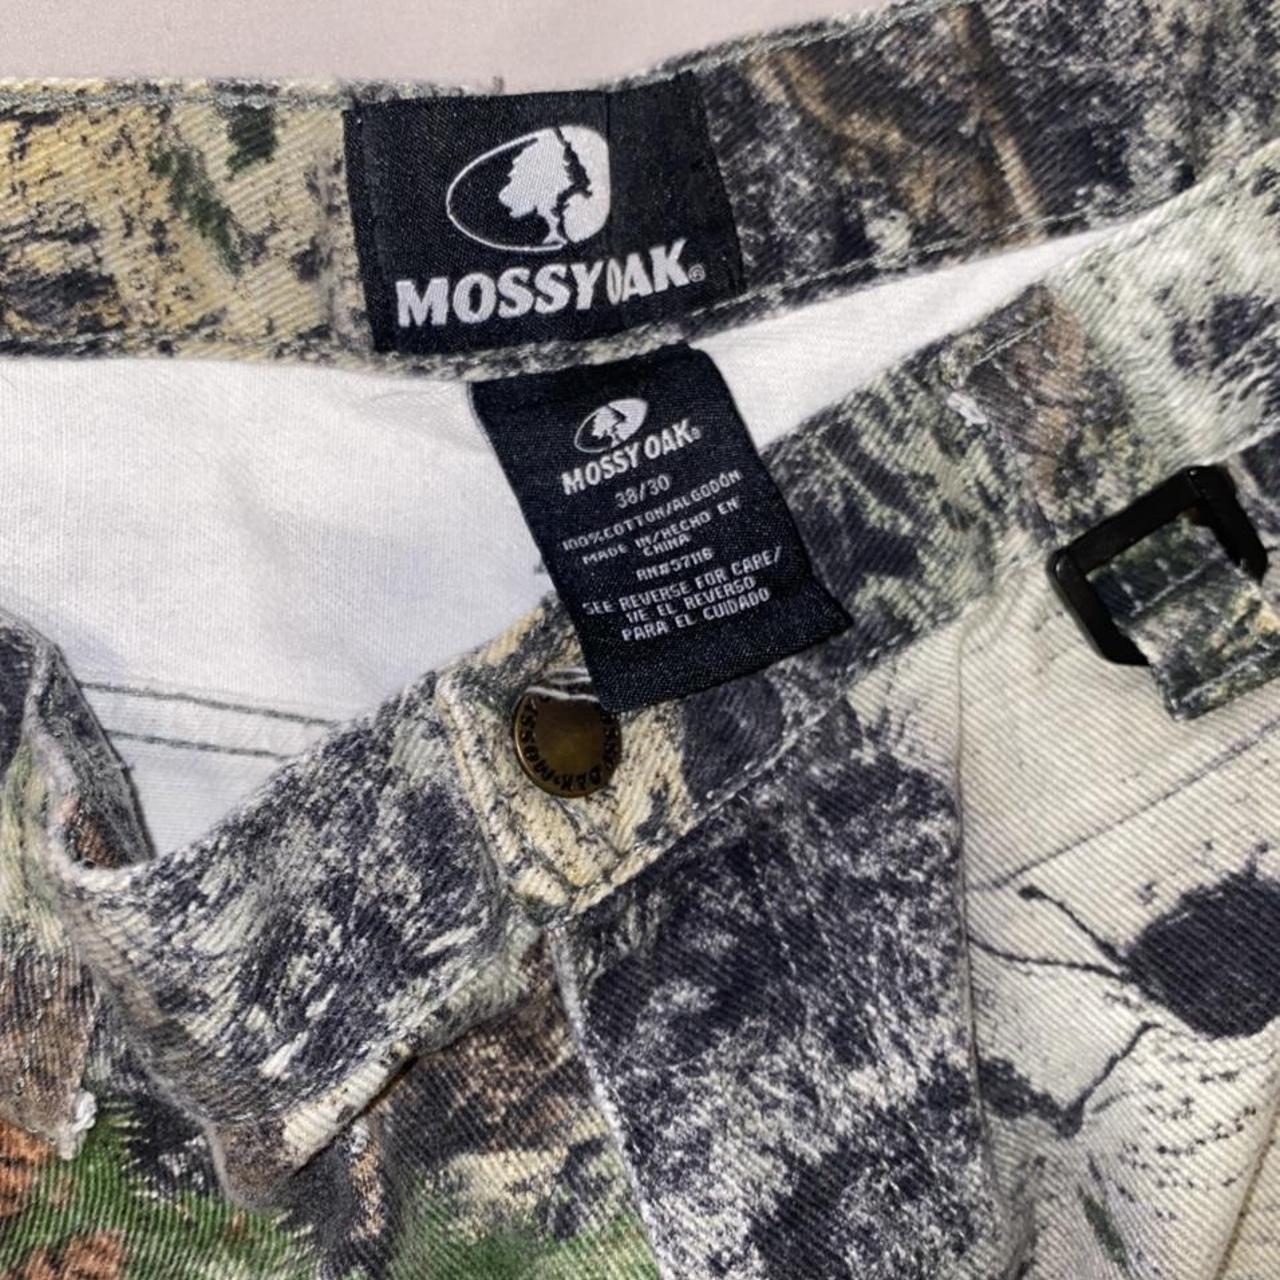 Mossy oak camo pants Measurements on tag - Depop